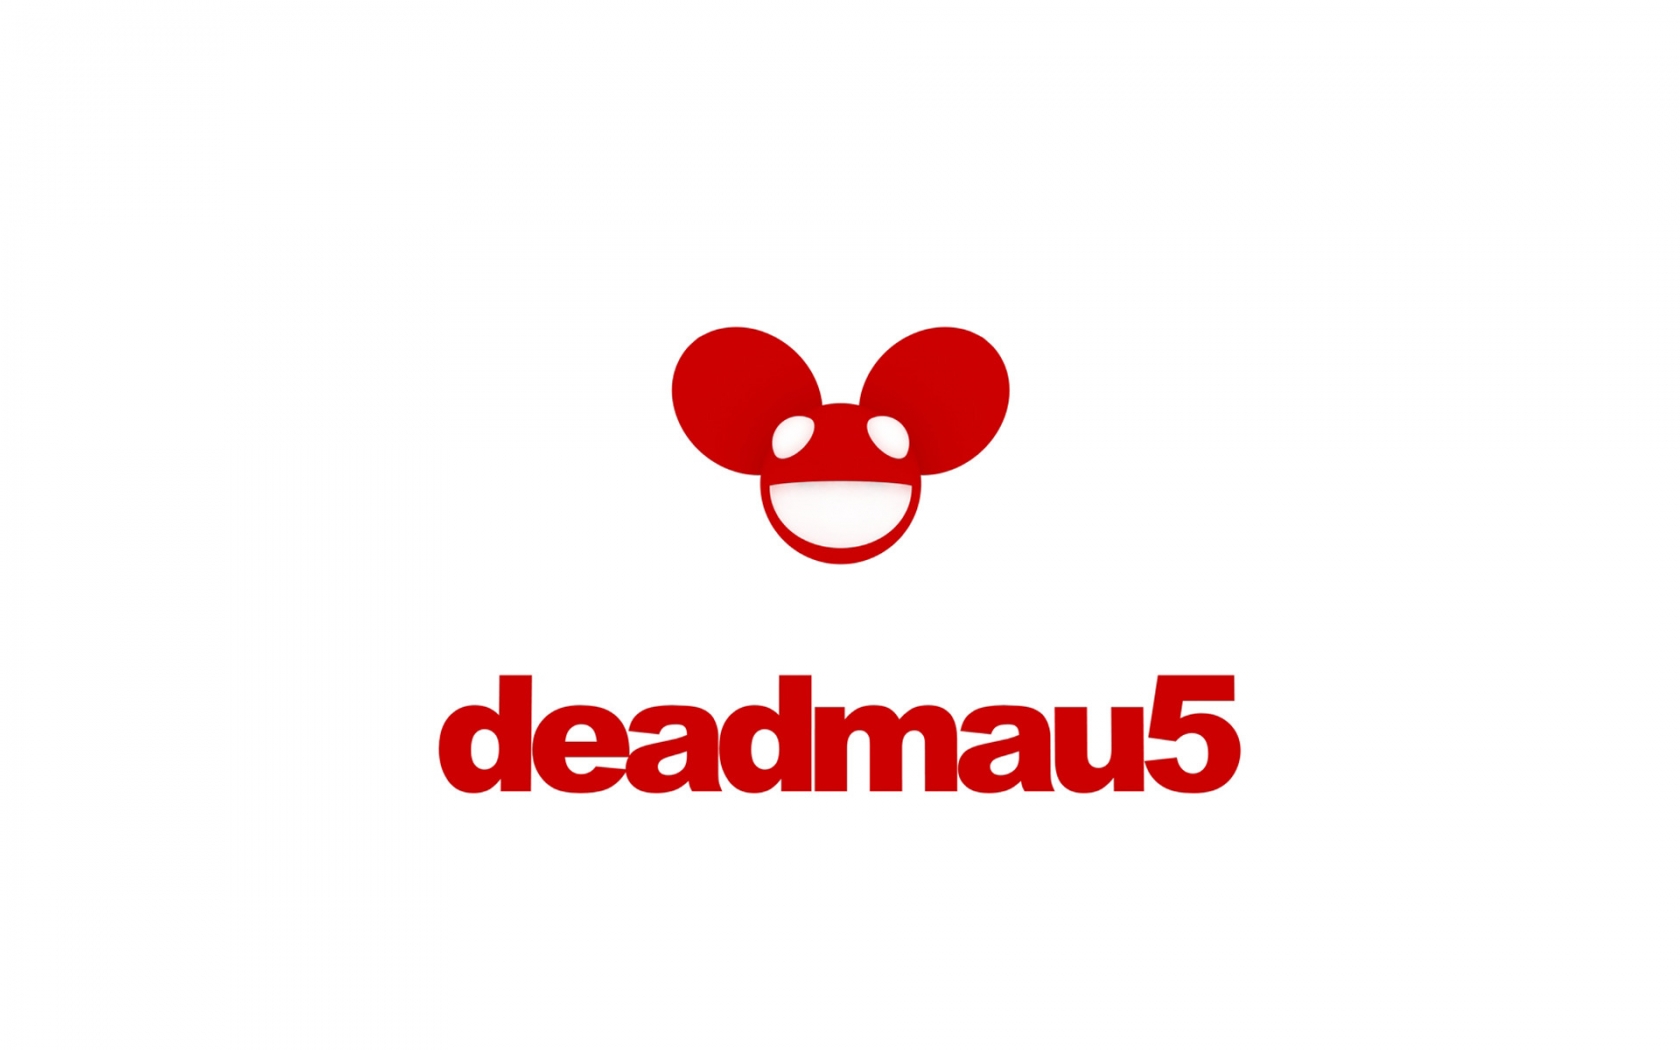 Deadmau5 Logo for 1680 x 1050 widescreen resolution